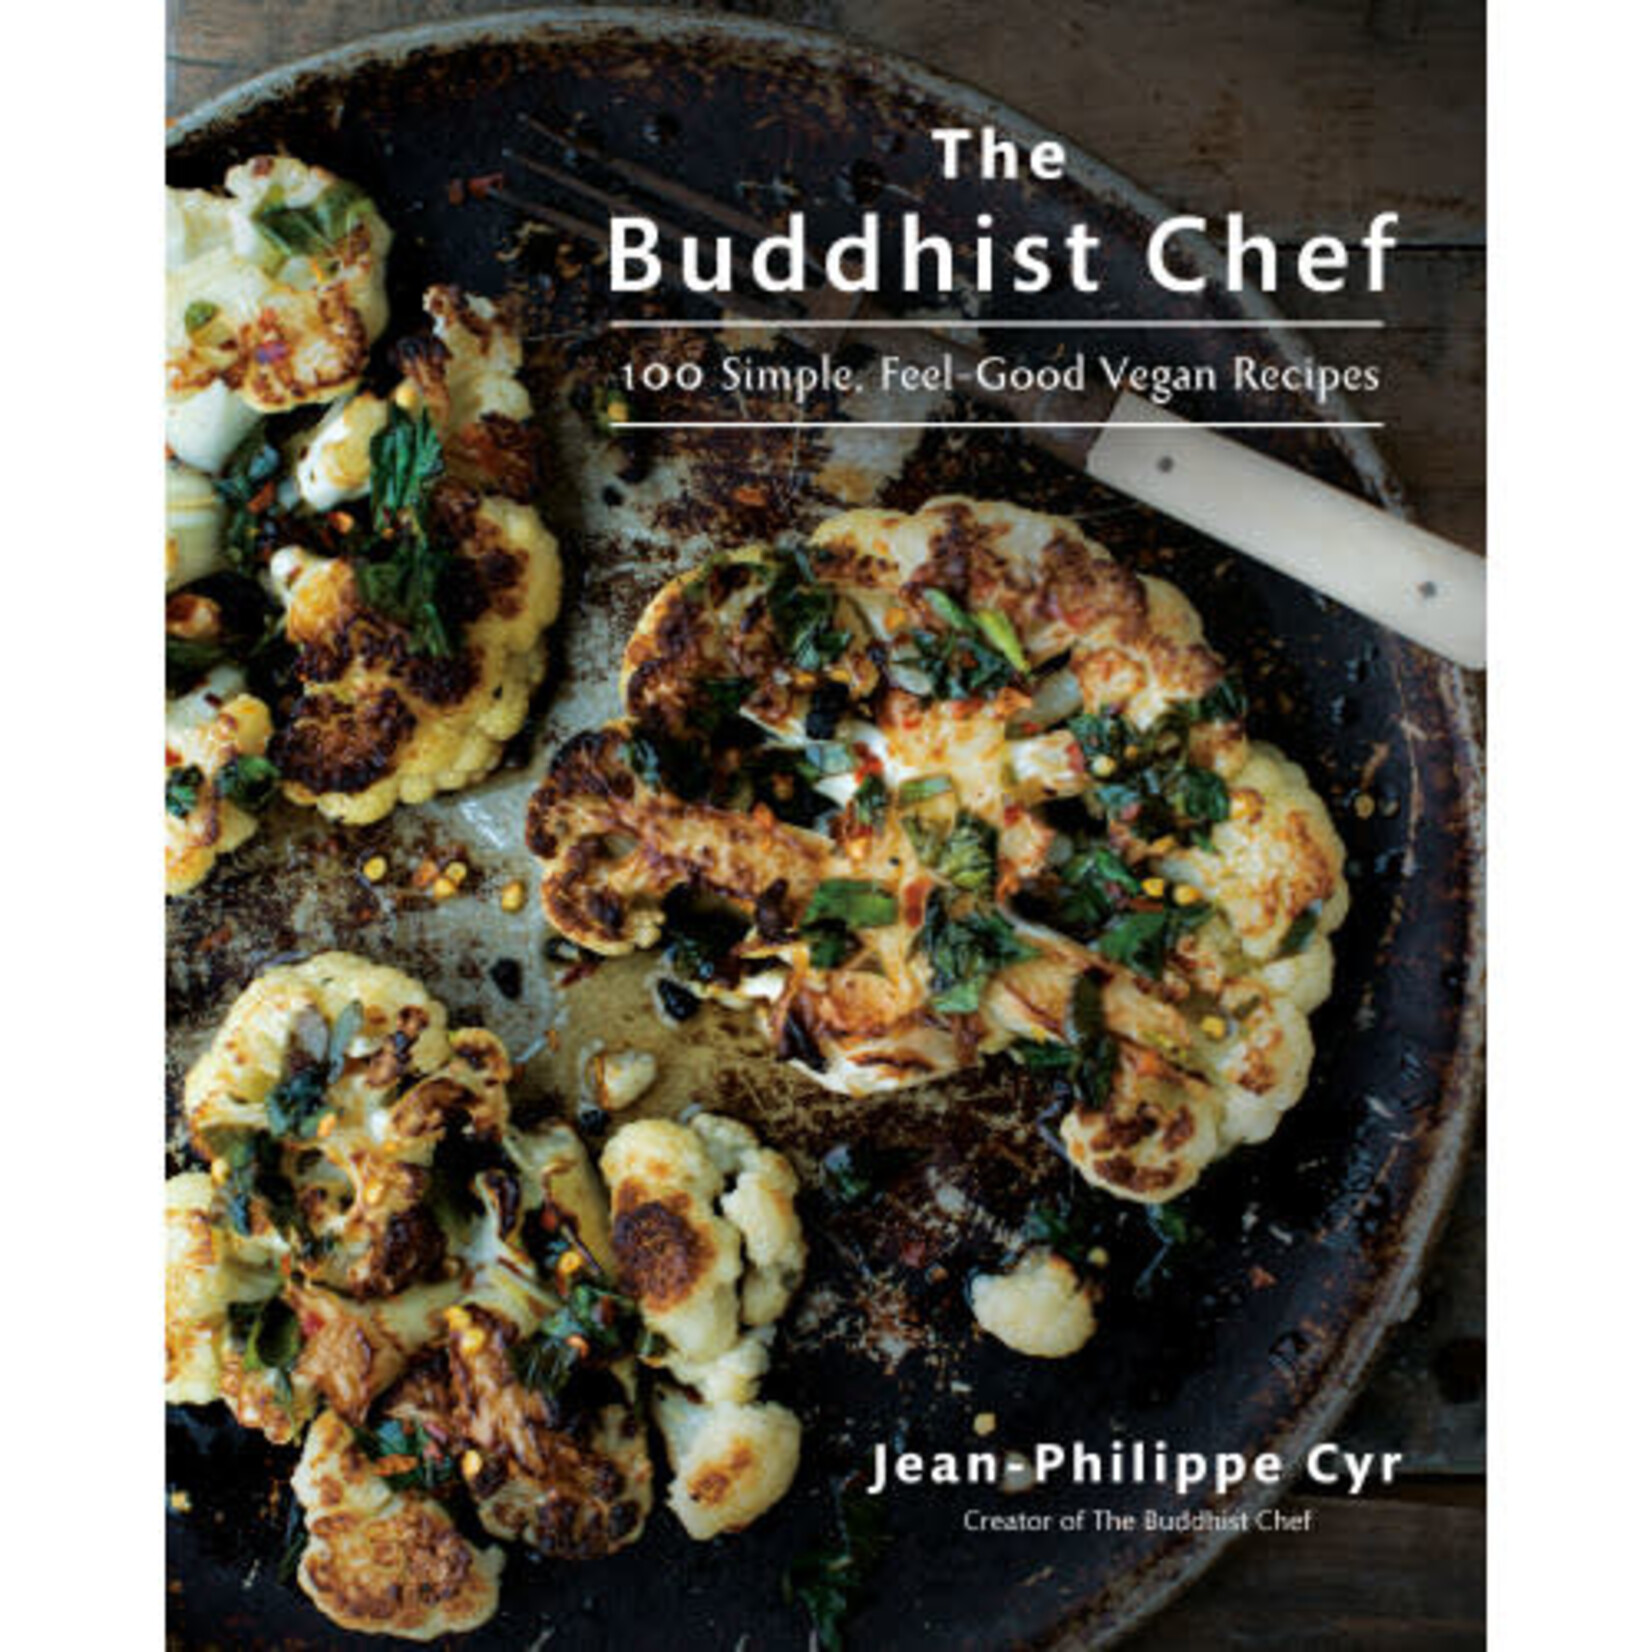 The Buddhist Chef - 100 Simple, Feel-Good Vegan Recipes